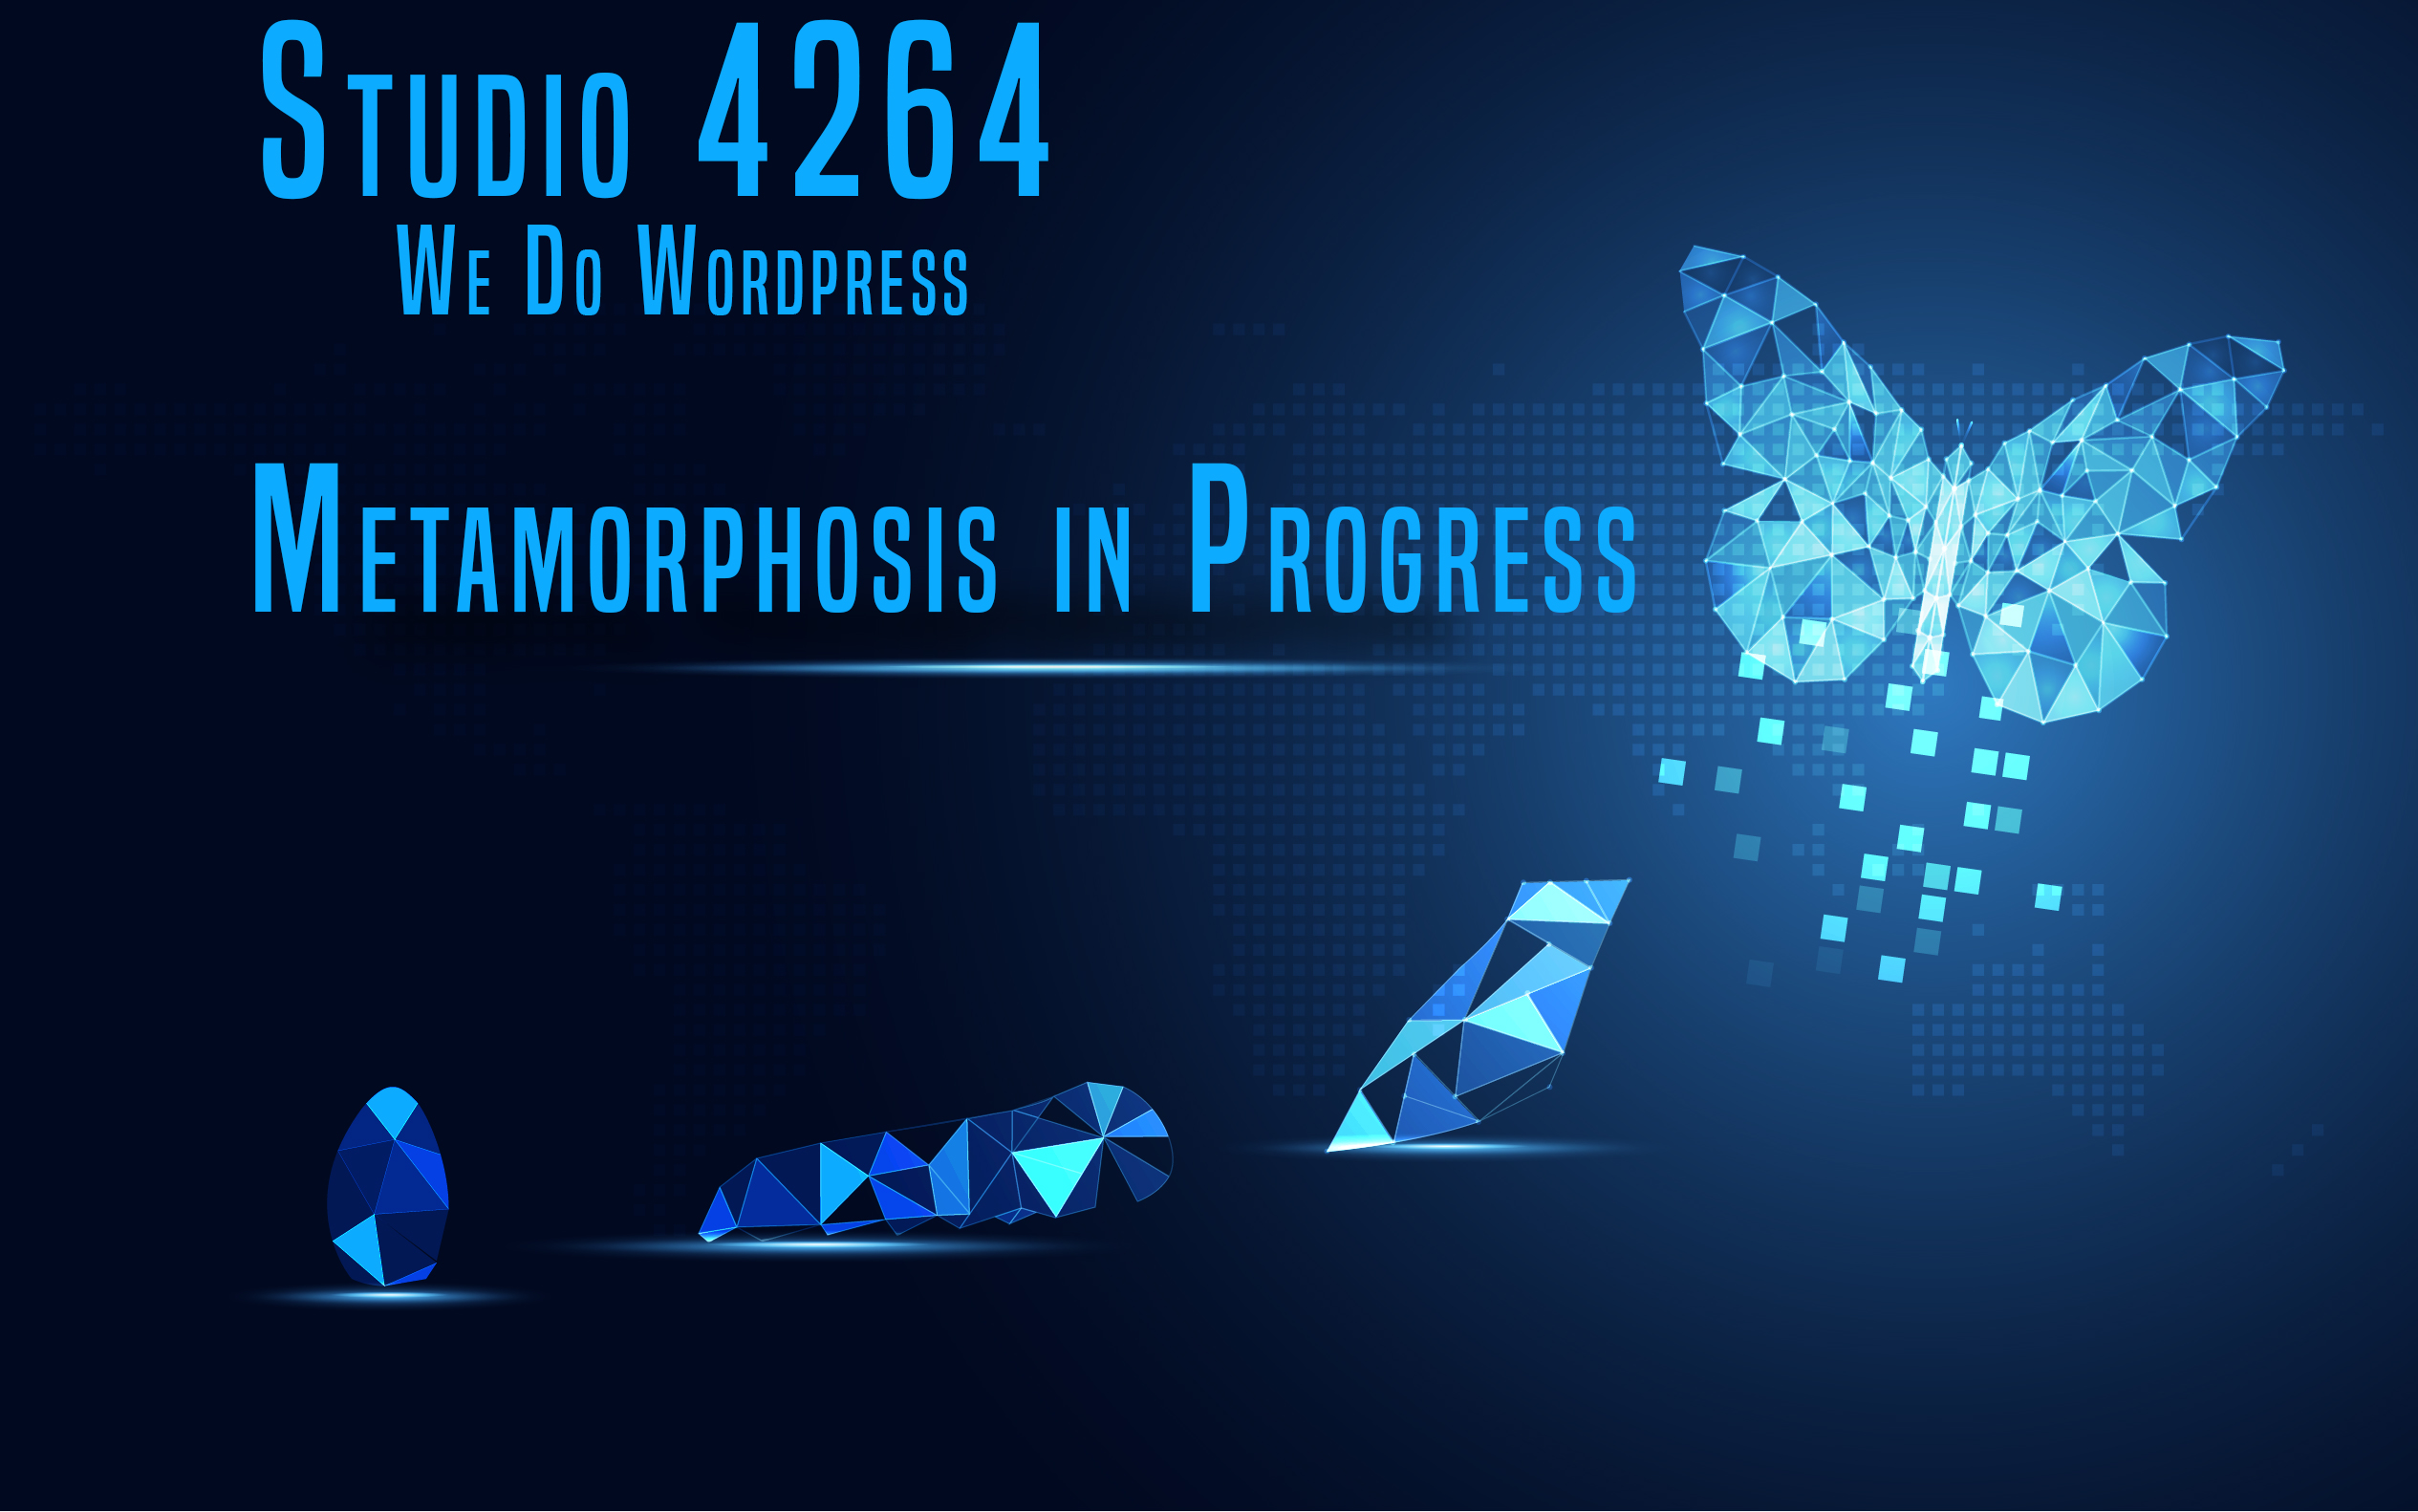 Image:  Studio 4264 - We Do WordPress - undergoing a metamorphosis